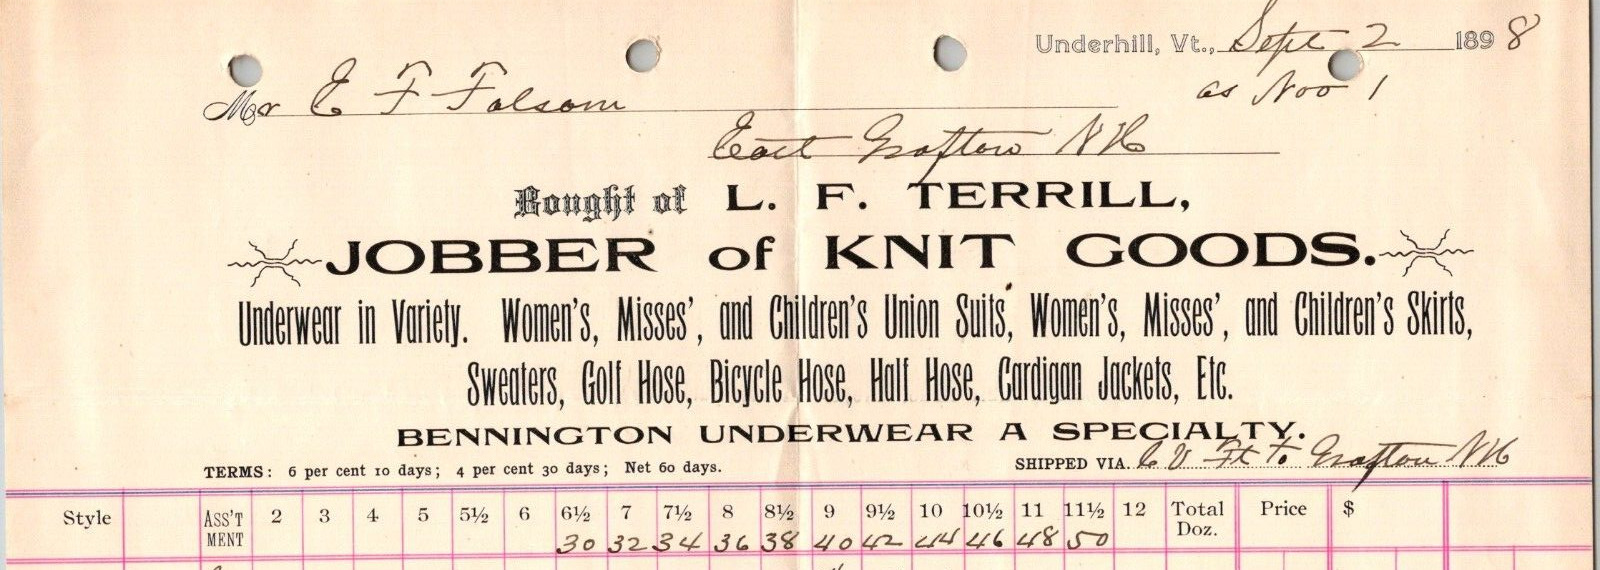 1898 L F TERRILL JOBBERS KNIT GOODS UNDERWEAR UNION SUITS BICYCKE HOSE GOLF HOSE